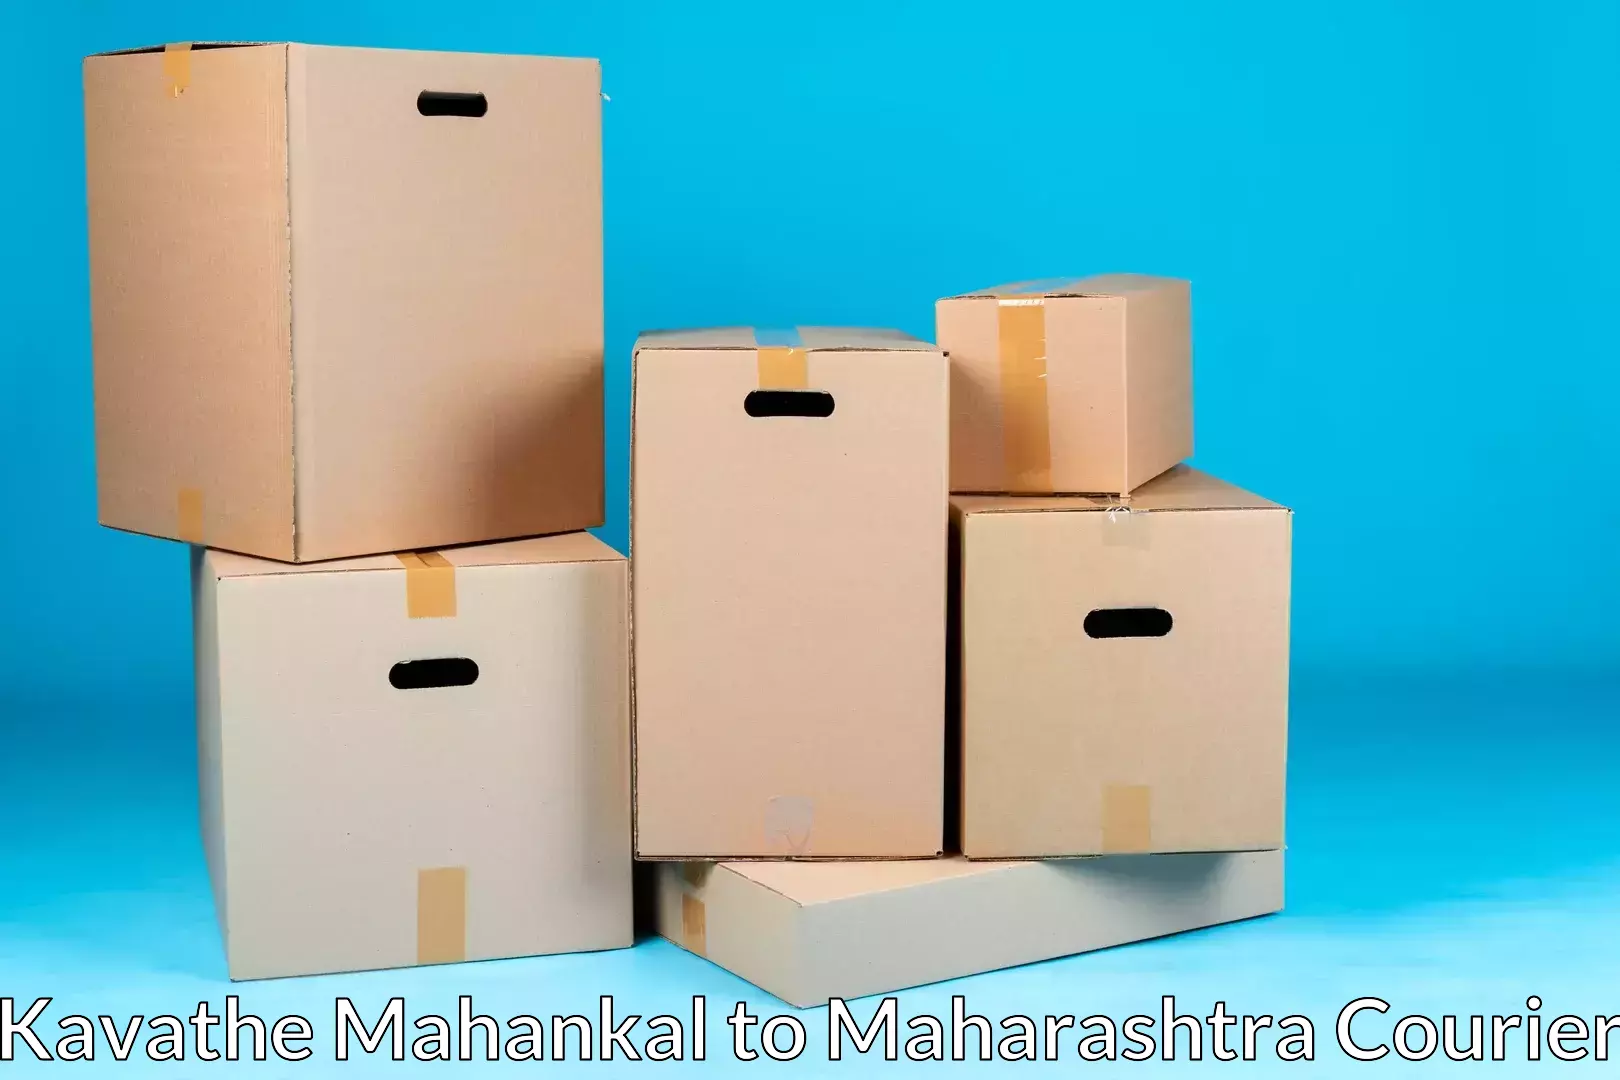 Home goods moving company Kavathe Mahankal to Loha Nanded